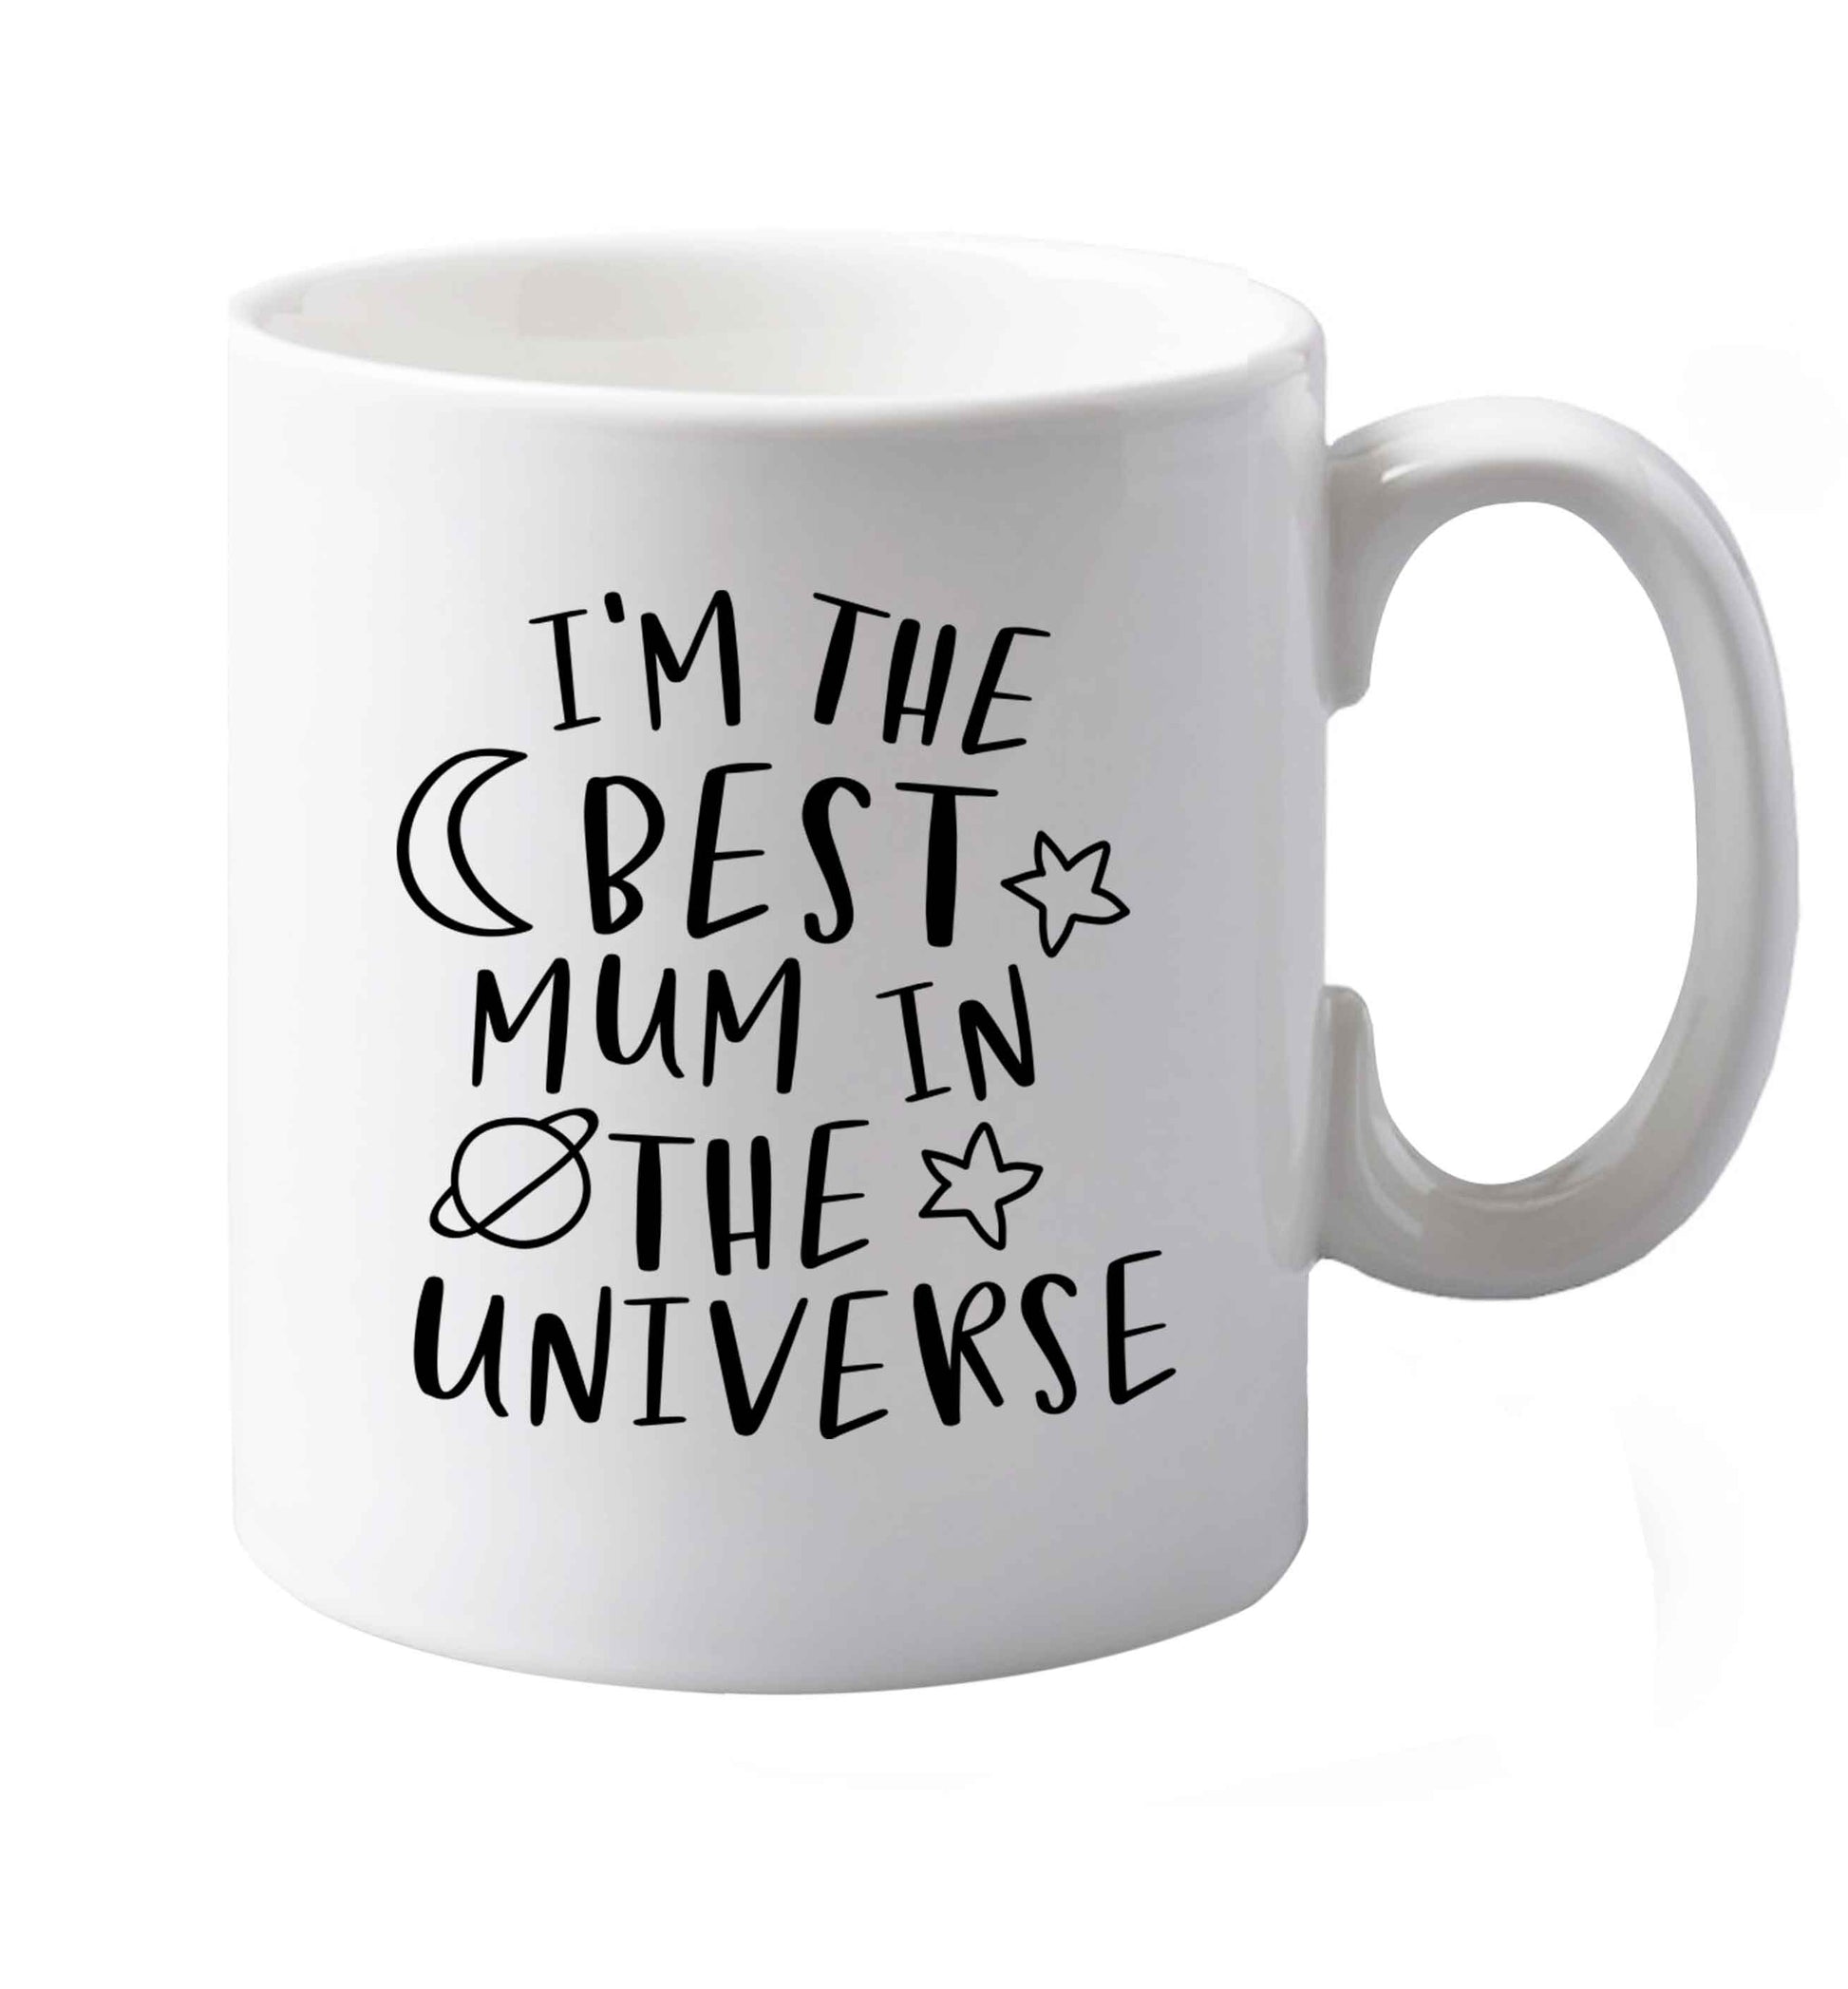 10 oz I'm the best mum in the universe ceramic mug both sides